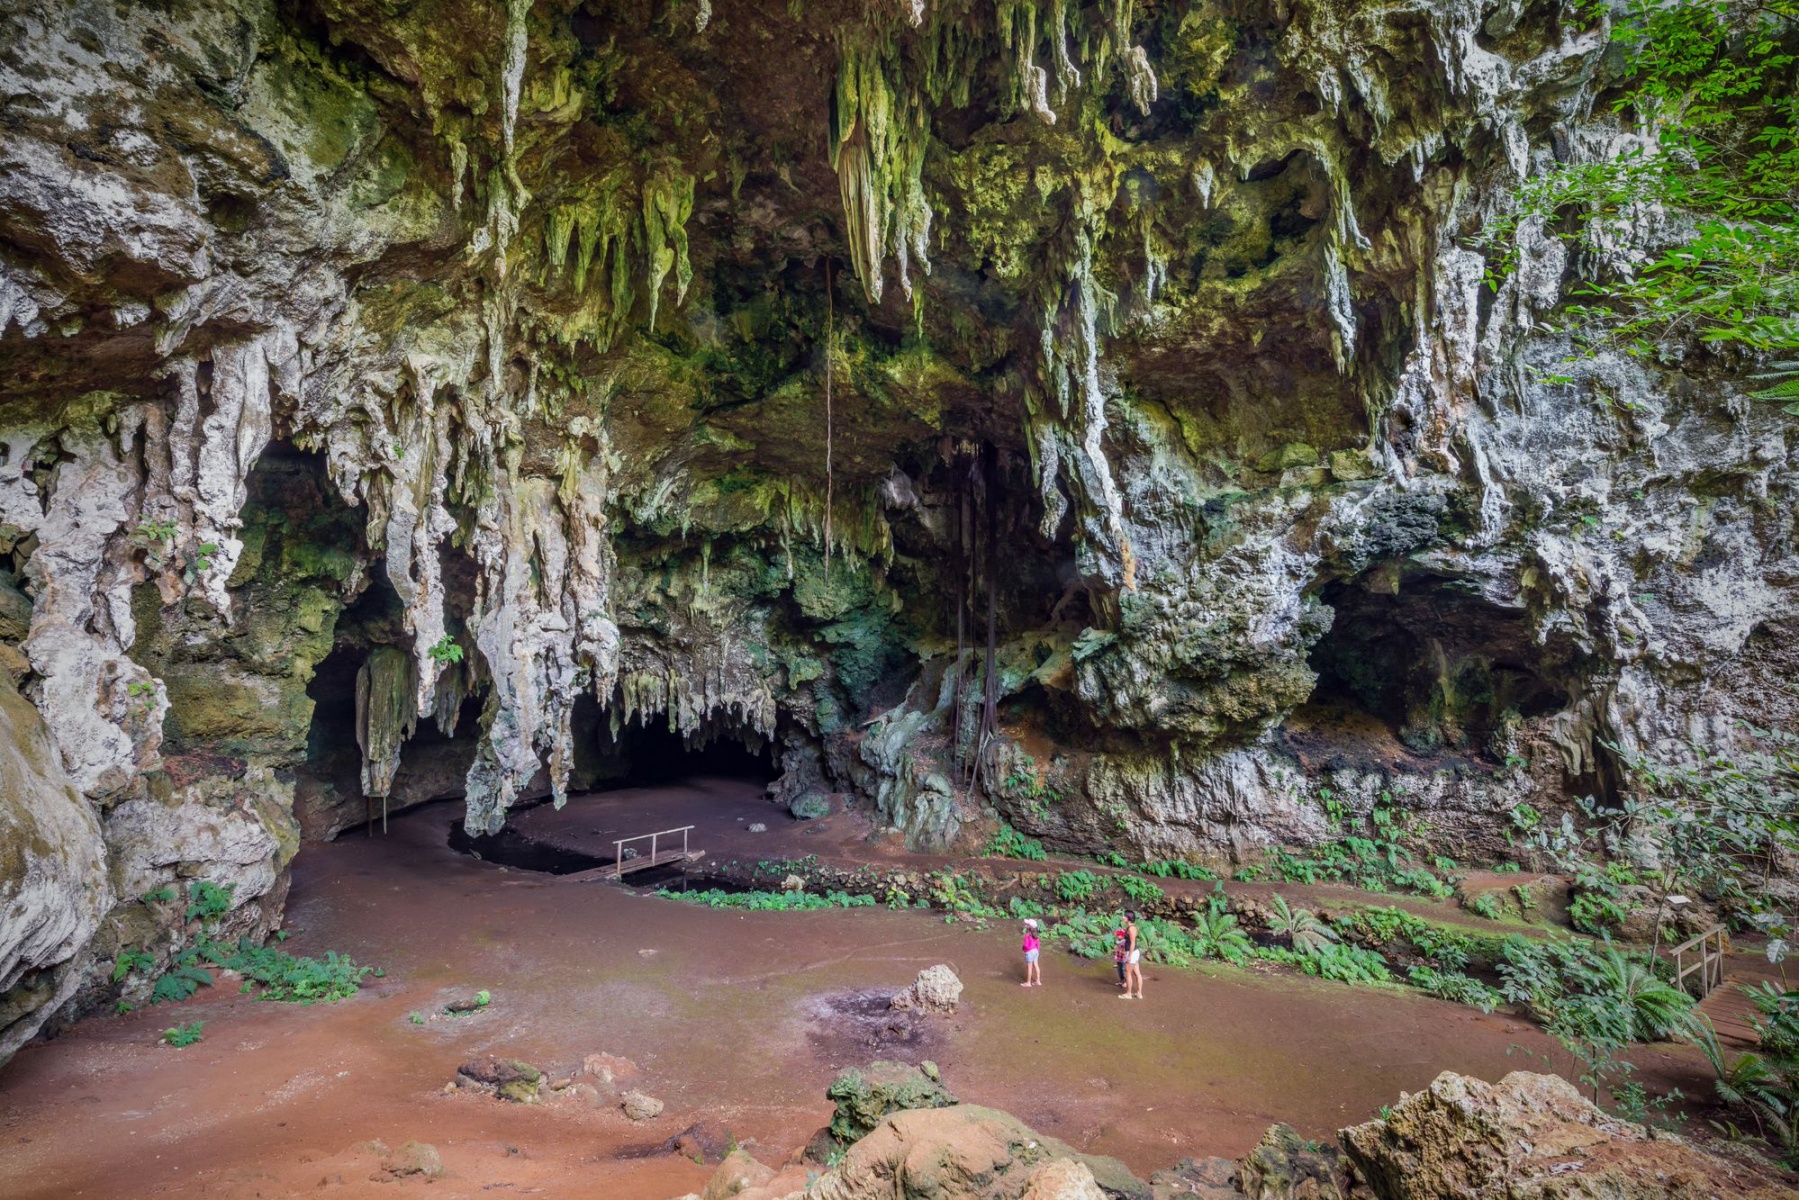 Queen Hortense Caves in New Caledonia